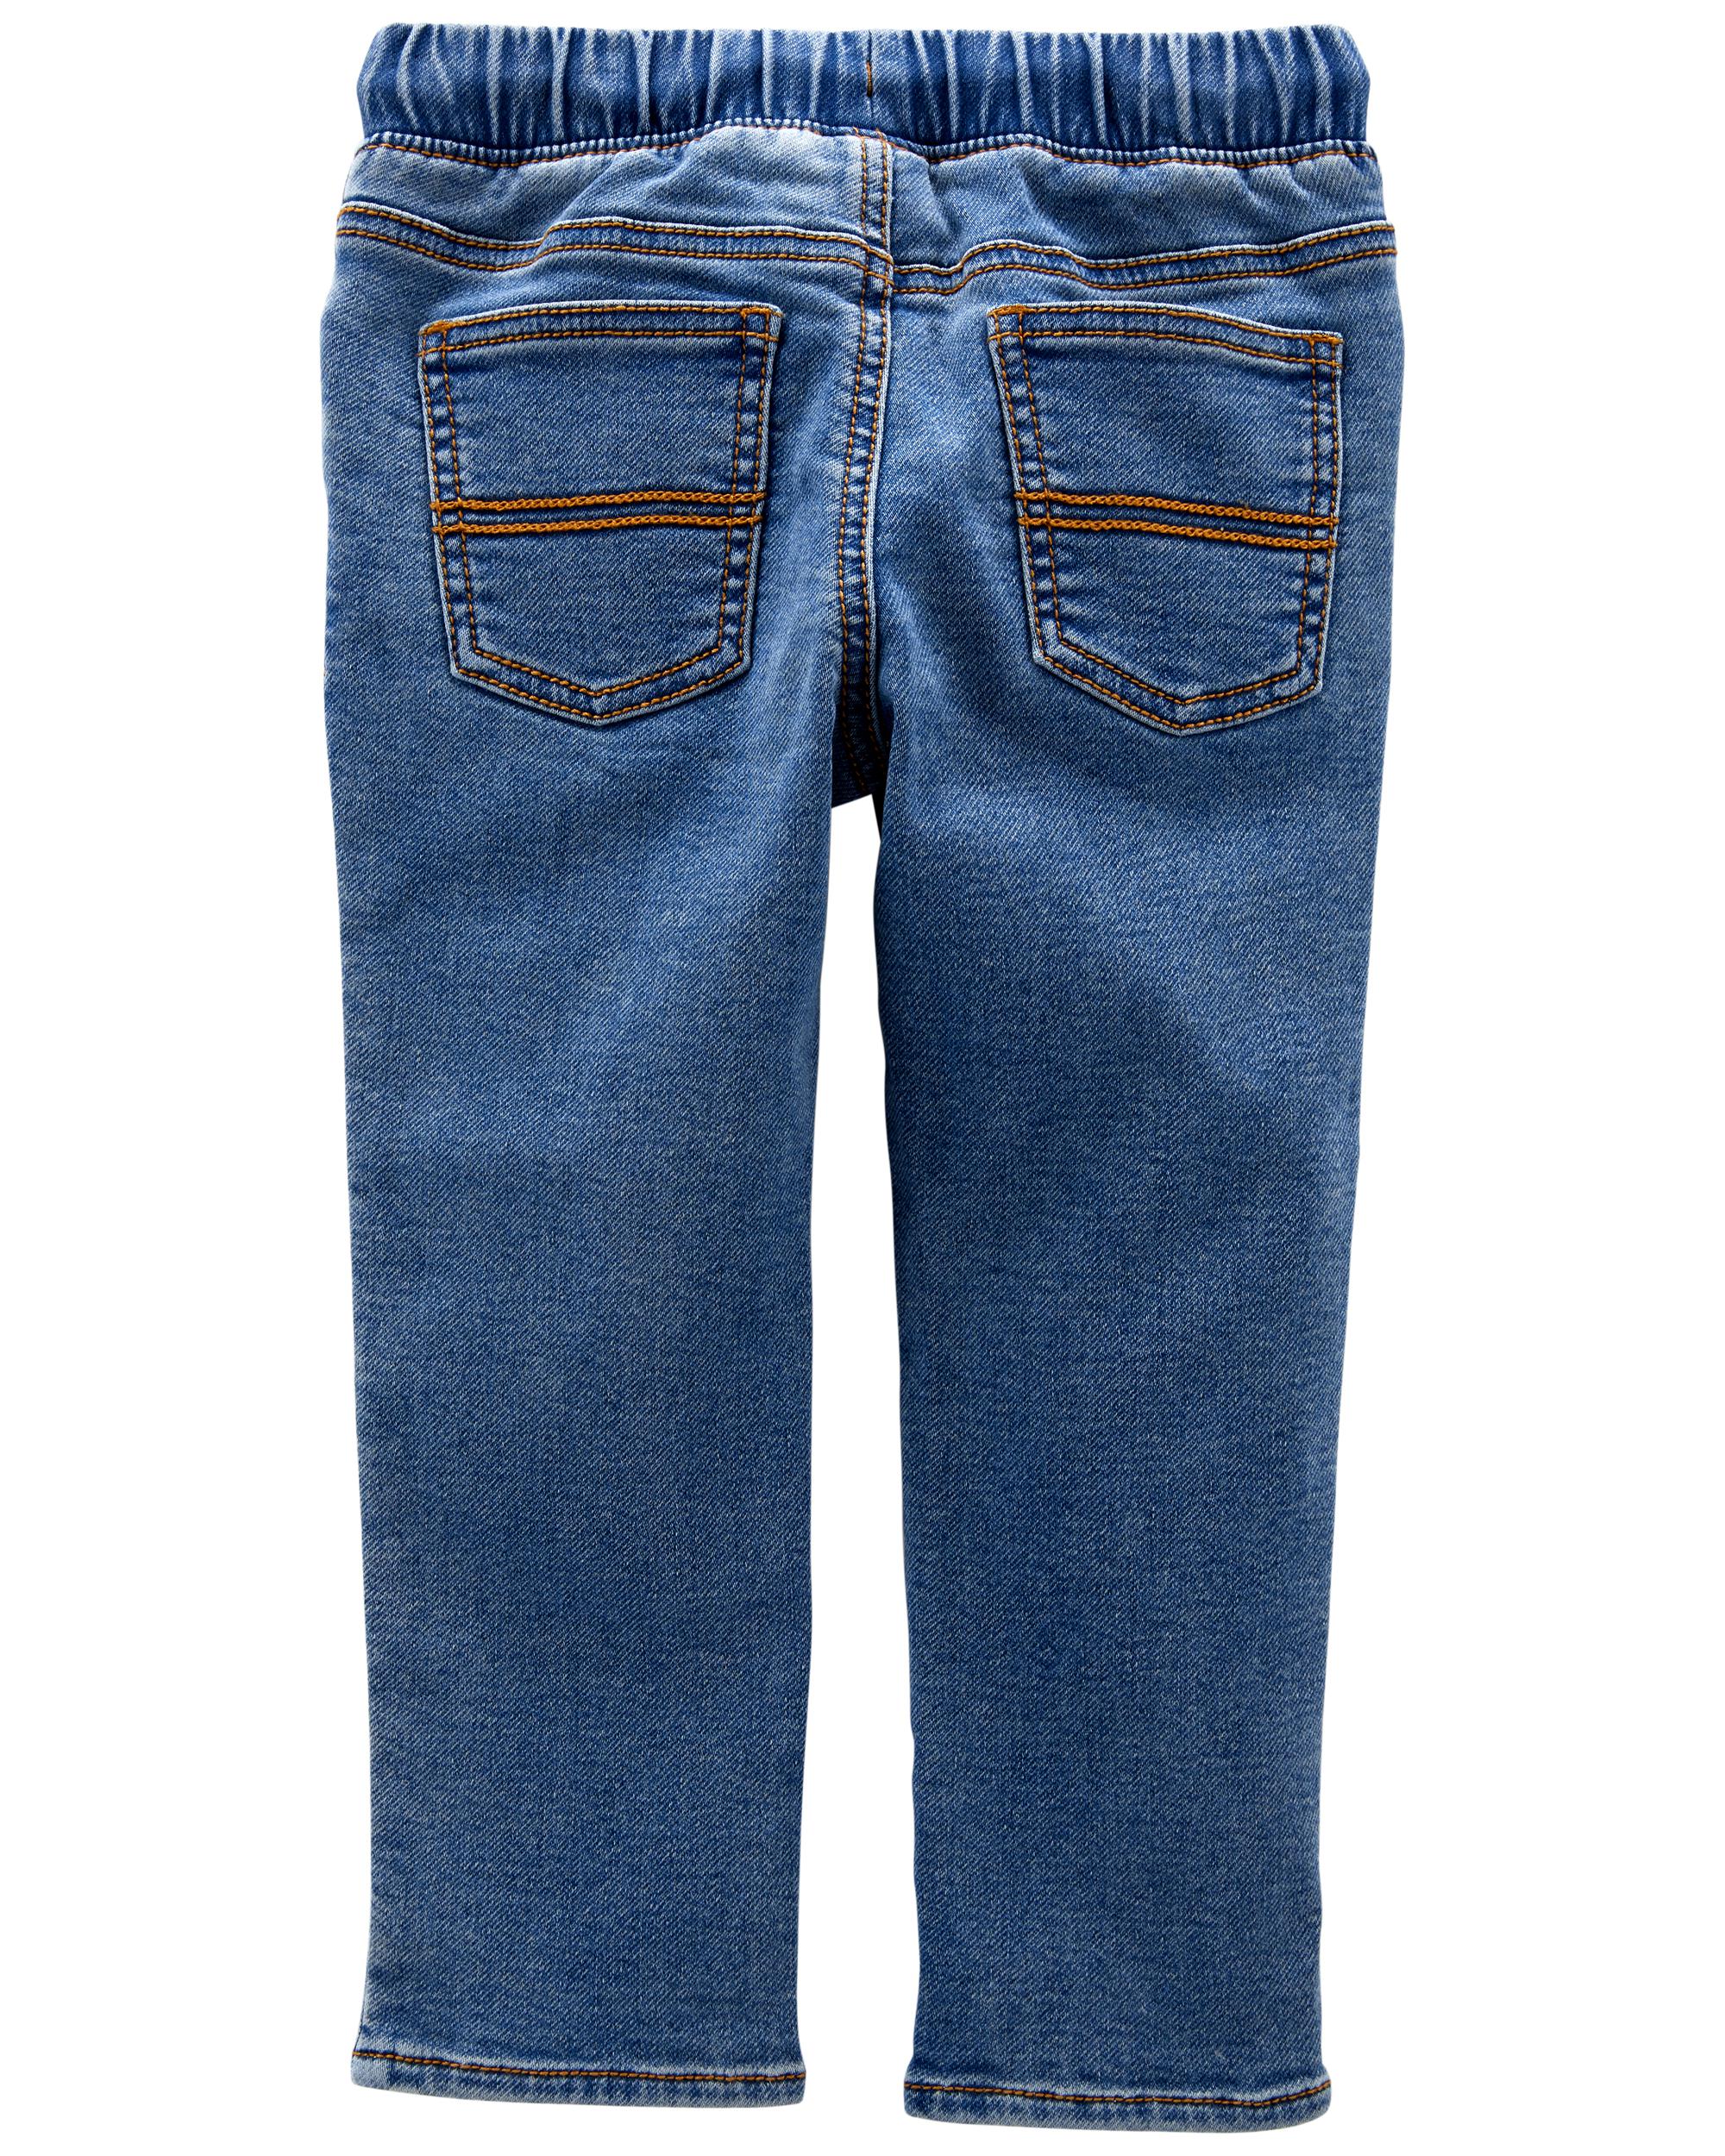 شلوار جینز 35520 سایز 3 ماه تا 6 سال مارک Carters